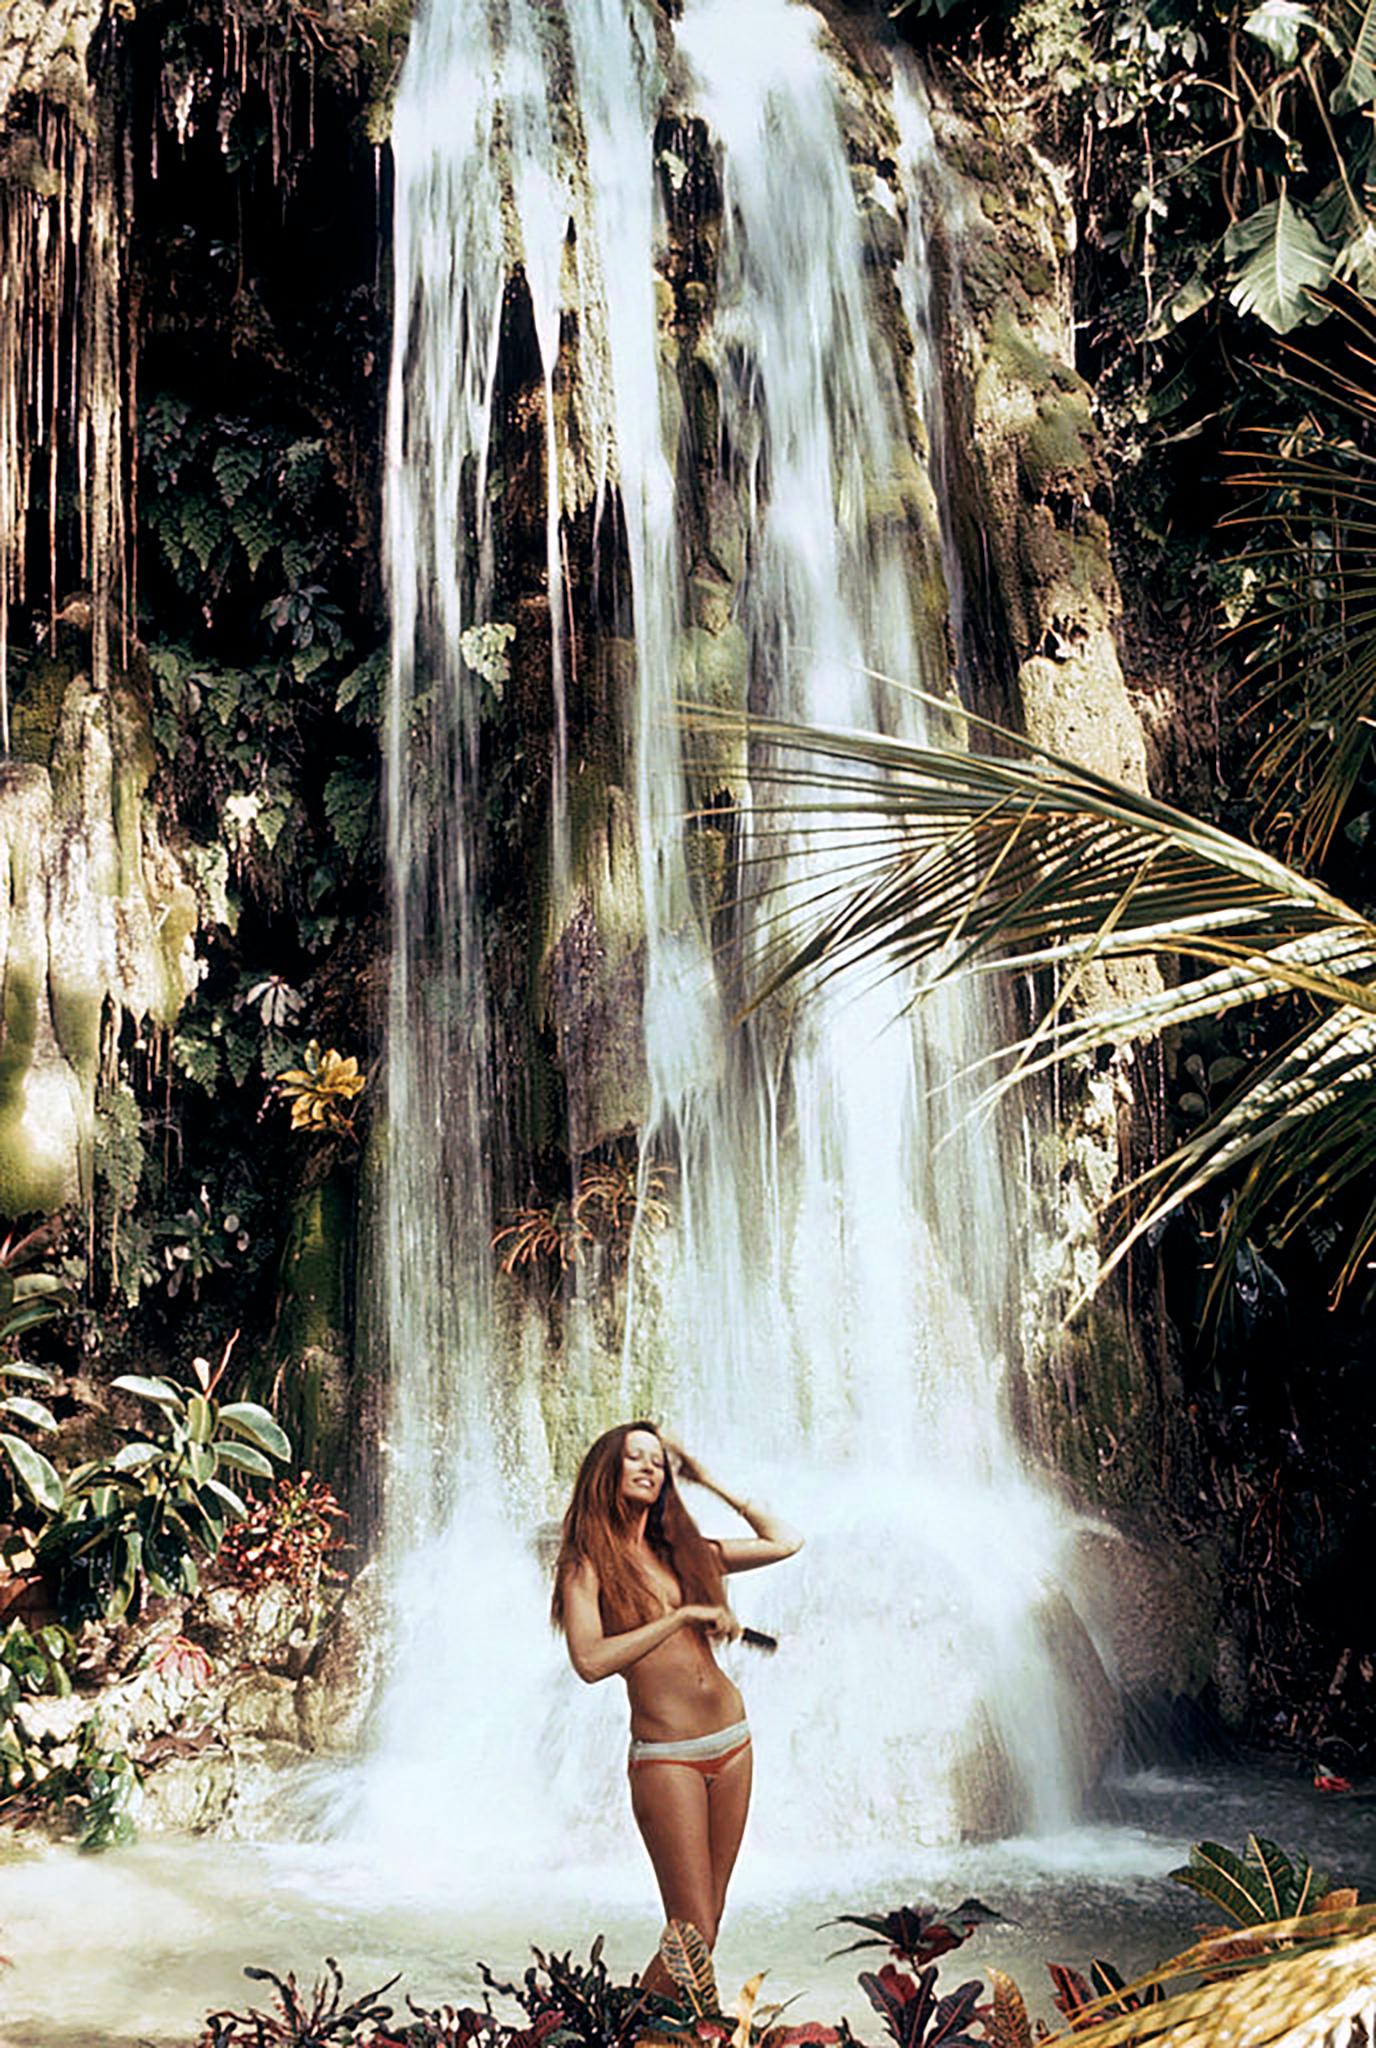 Slim Aarons Landscape Photograph – Wasserfall in der Rose Hall, Nachlassausgabe